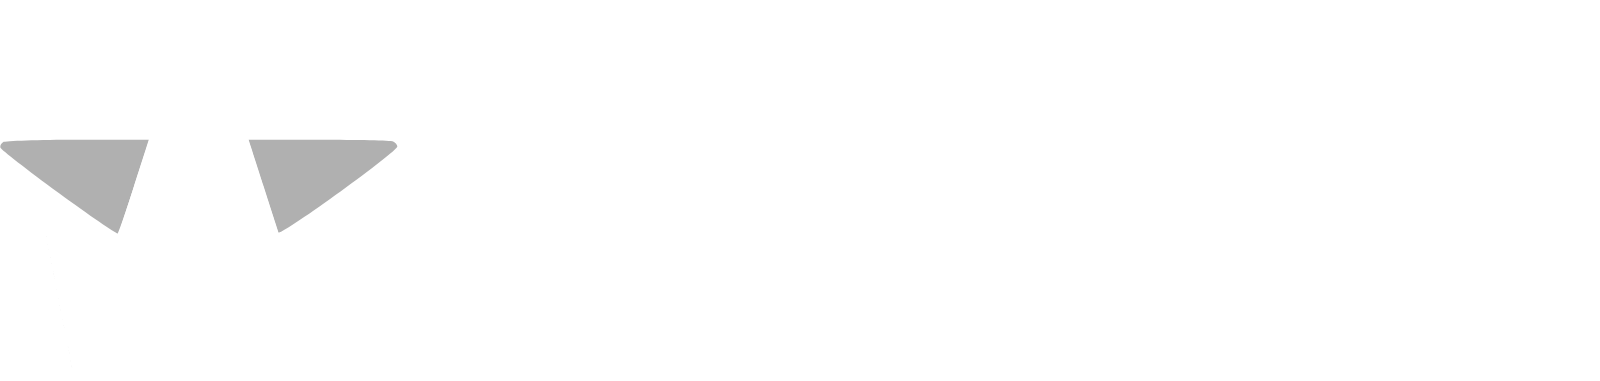 Astra Space logo grand pour les fonds sombres (PNG transparent)